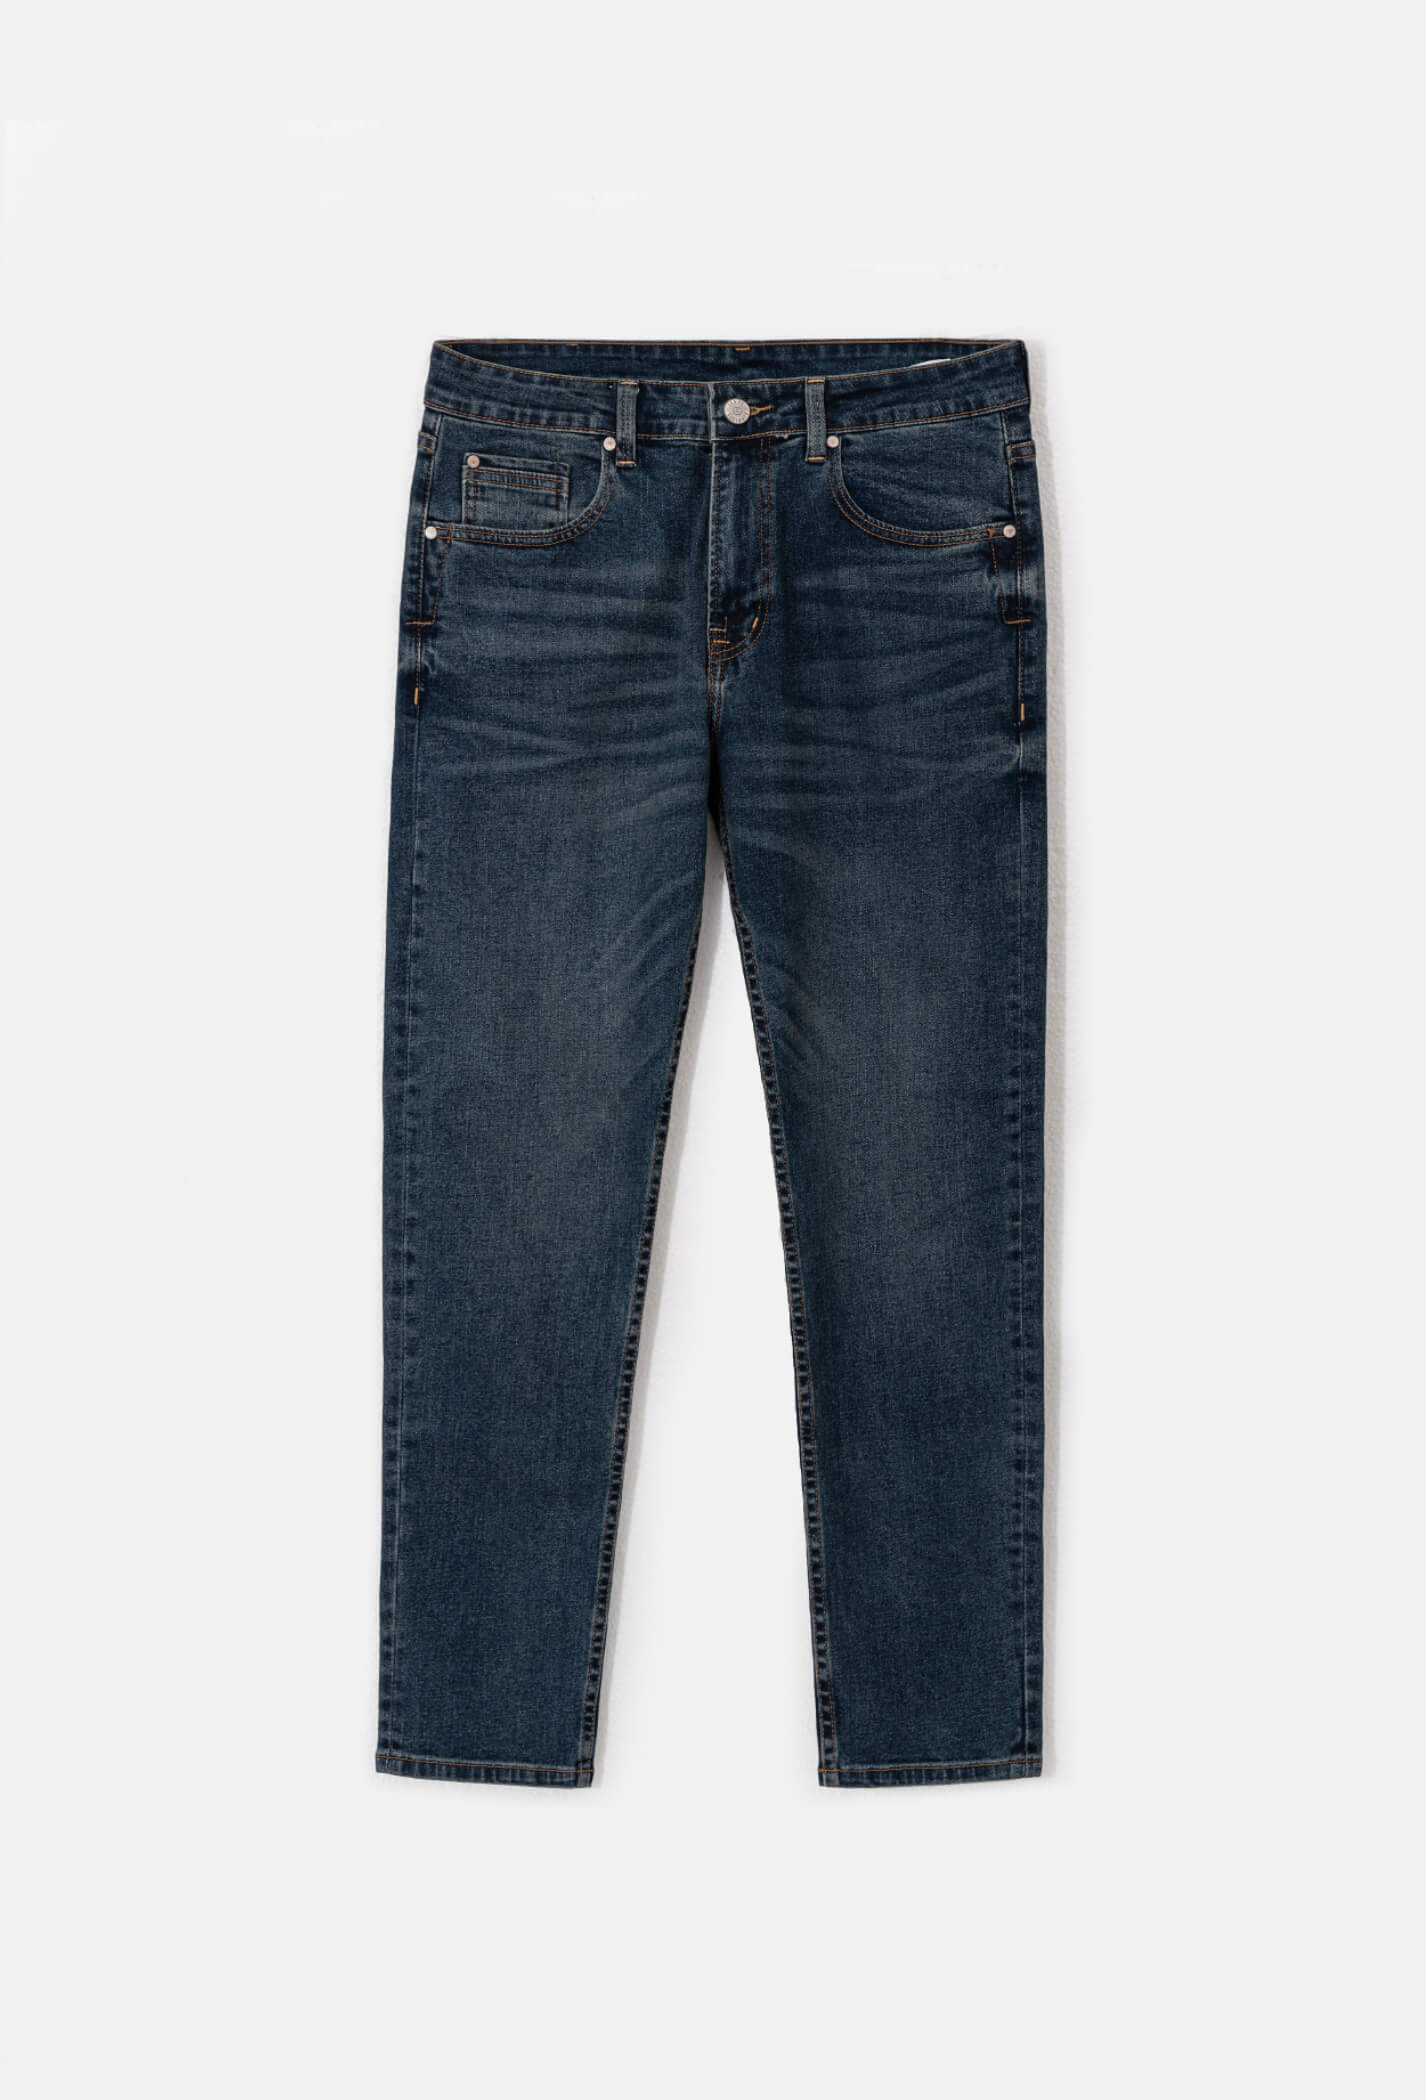 Quần Jeans Basic Slim V2 Xanh nh���t 2